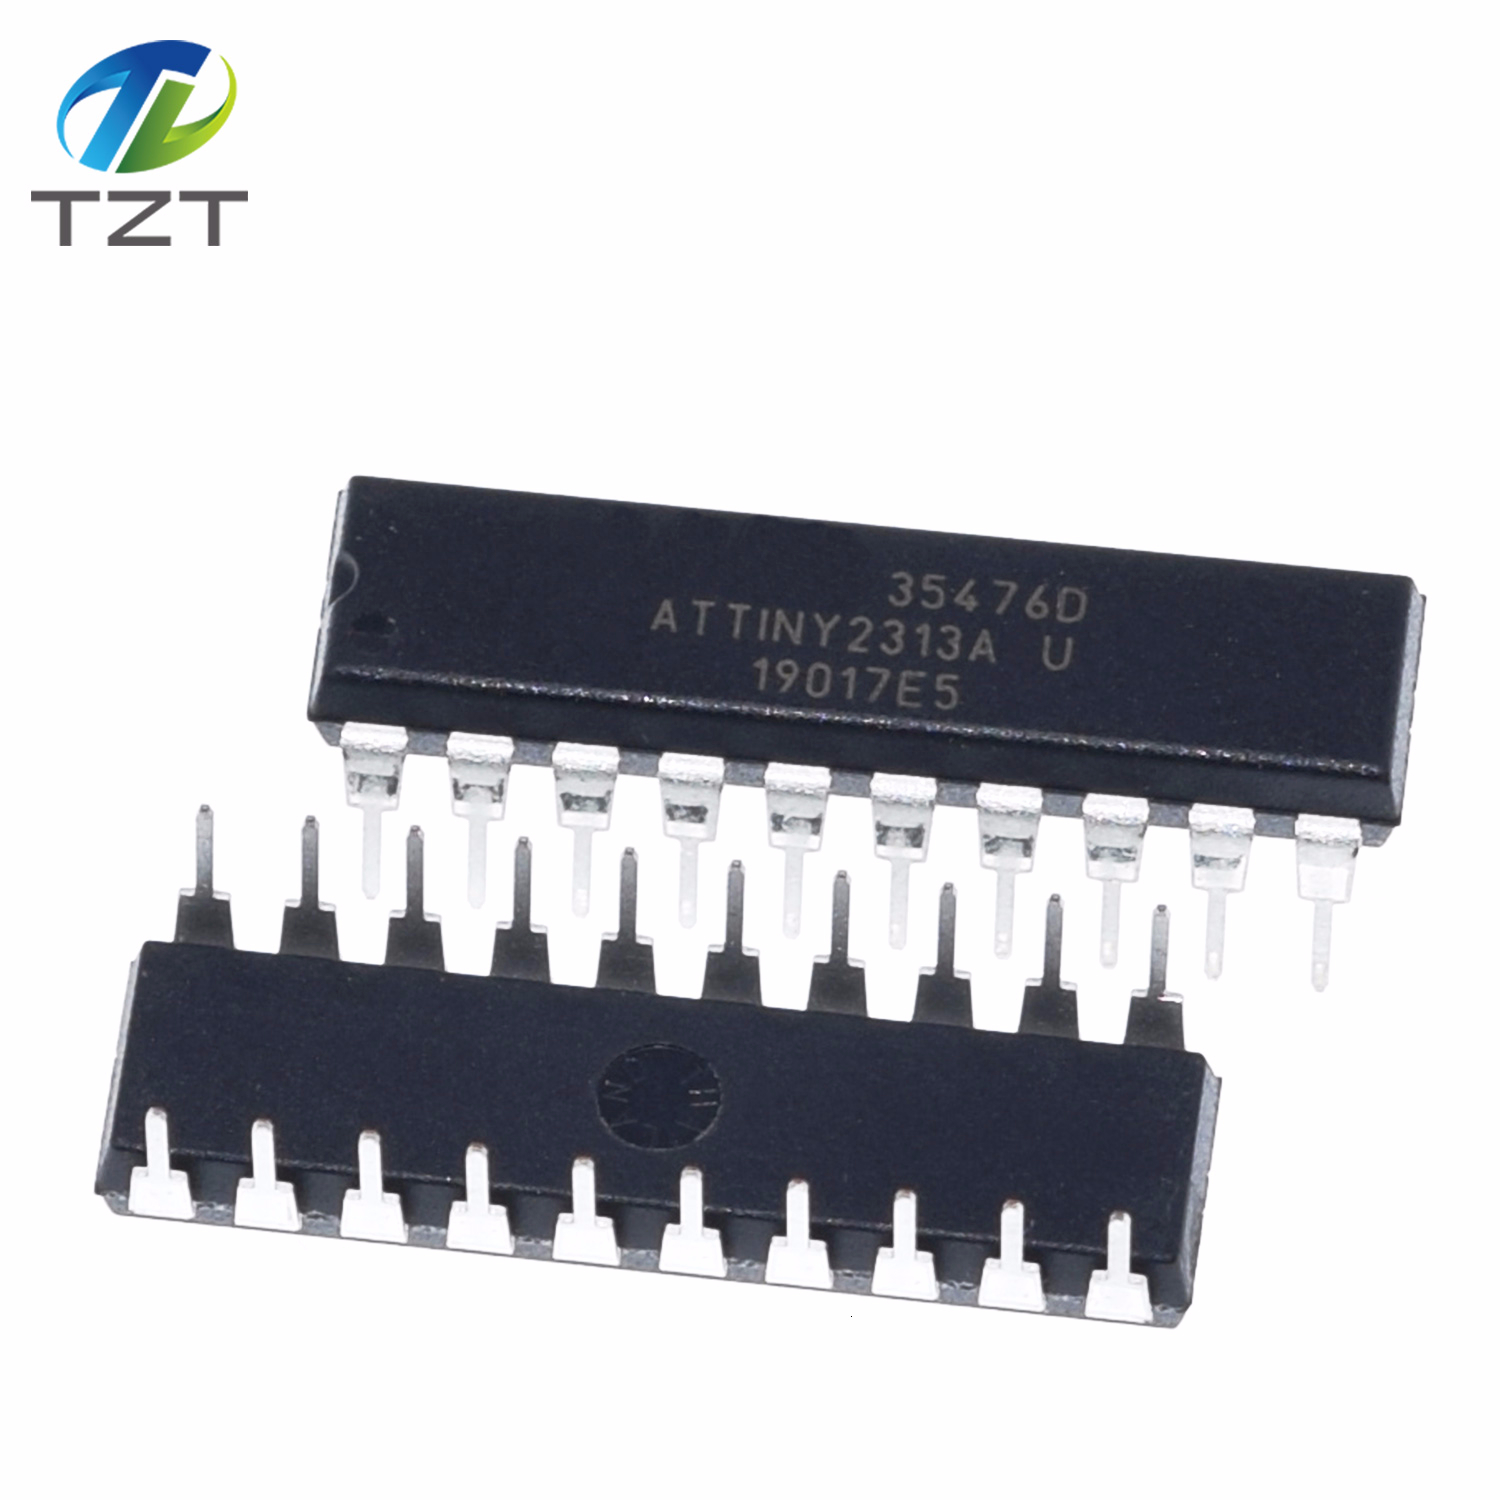 TZT ATTINY2313A-PU ATTINY2313 DIP20 MCU 8-bit ATtiny AVR RISC 2KB Flash 2.5V/3.3V/5V 20-Pin DIP new original